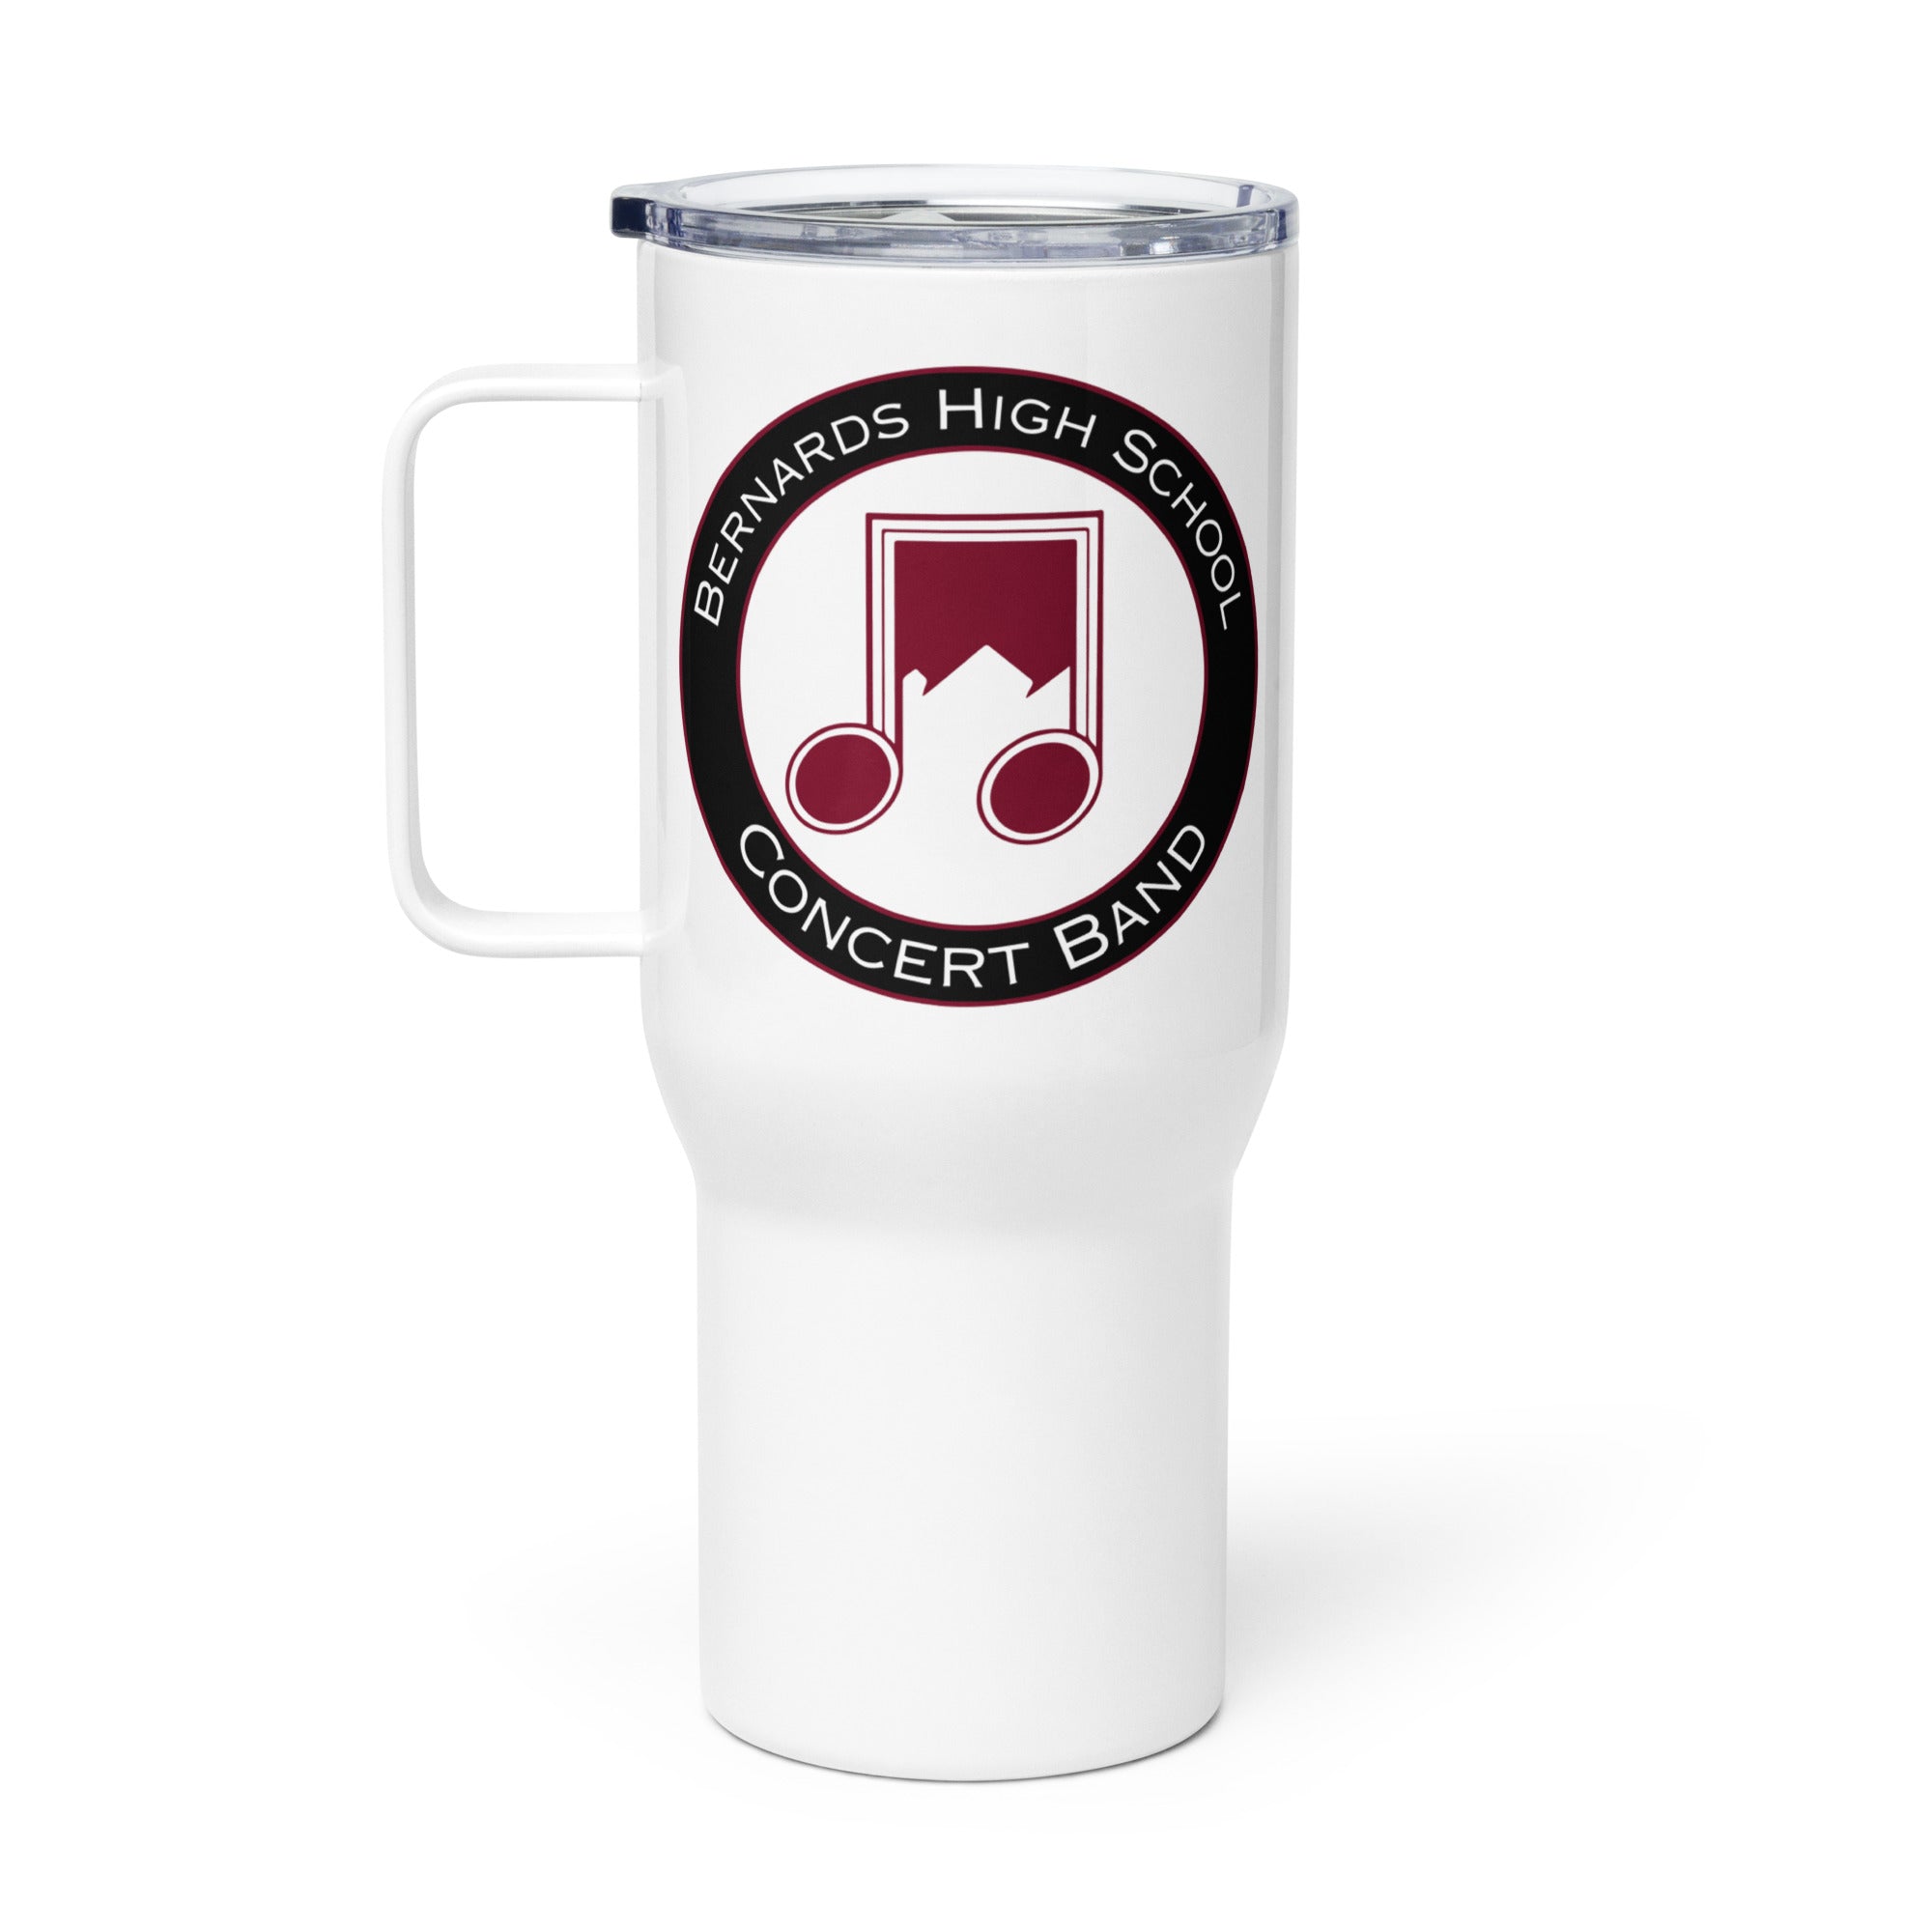 BHS Band Travel mug with a handle